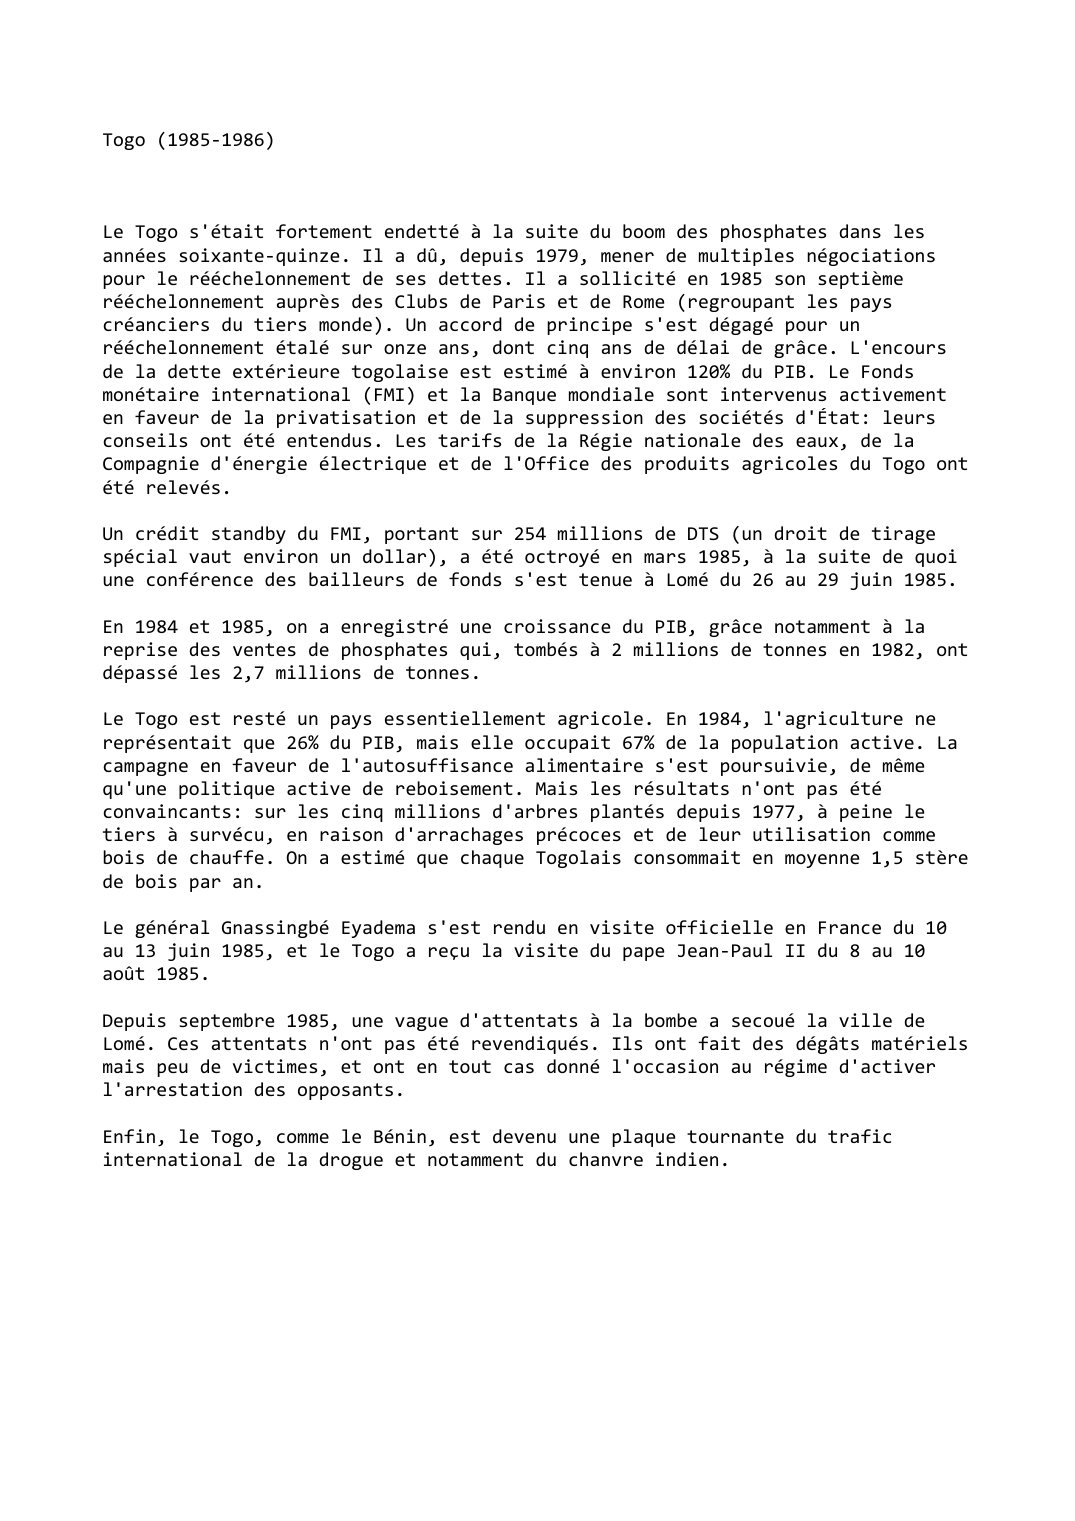 Prévisualisation du document Togo (1985-1986)